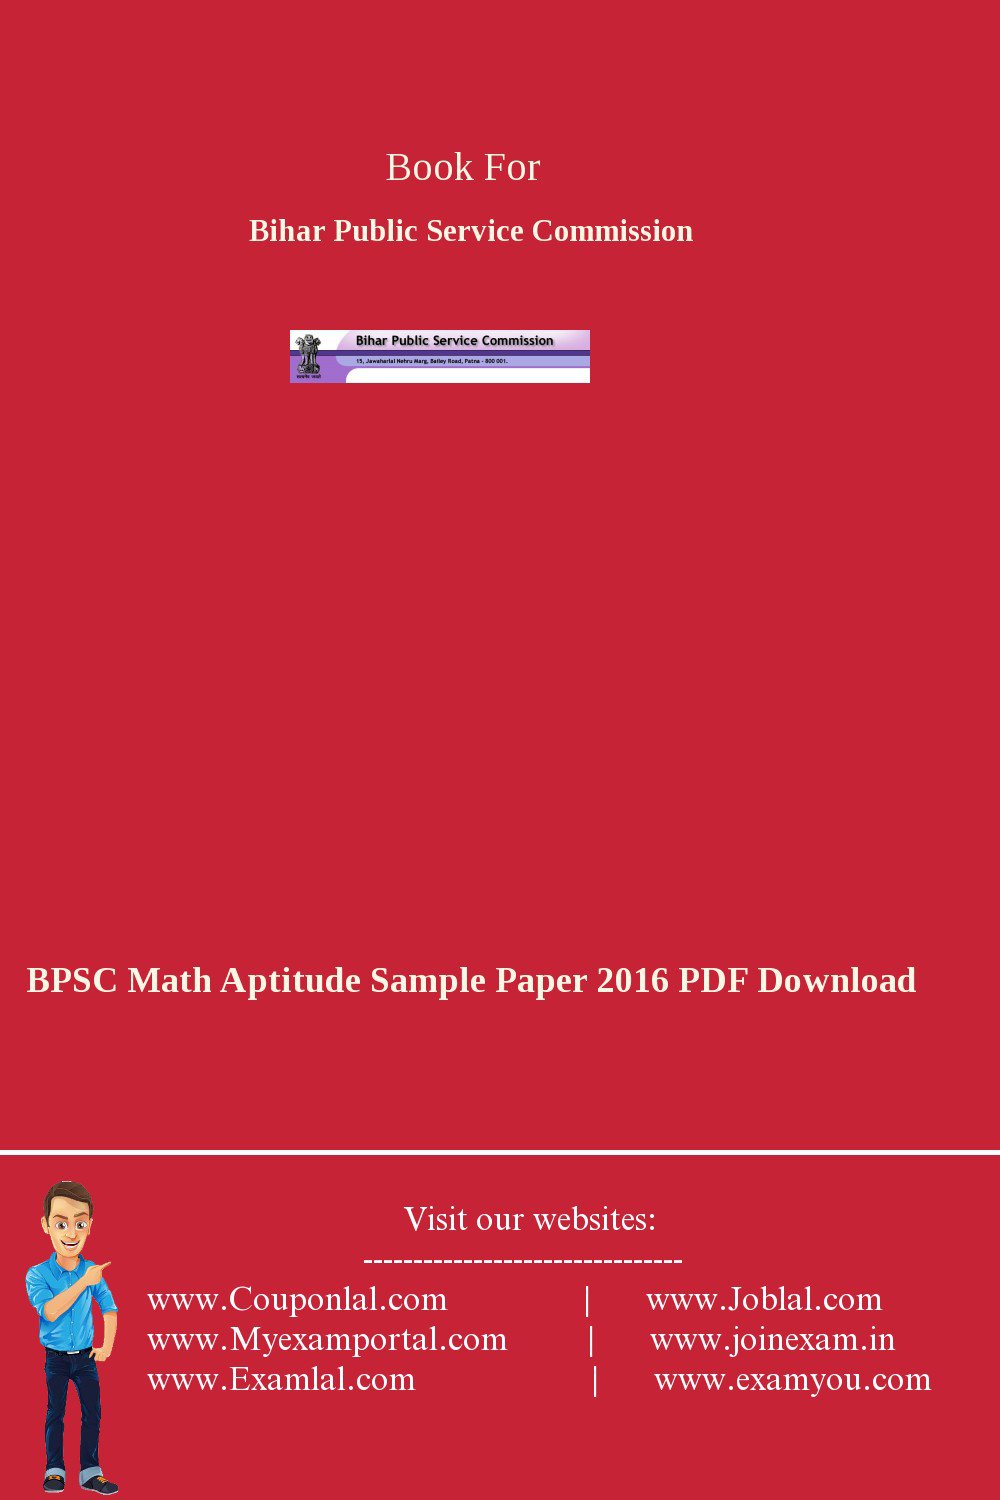 bihar-public-service-commission-bpsc-math-aptitude-sample-paper-2016-pdf-download-it-s-over-9000